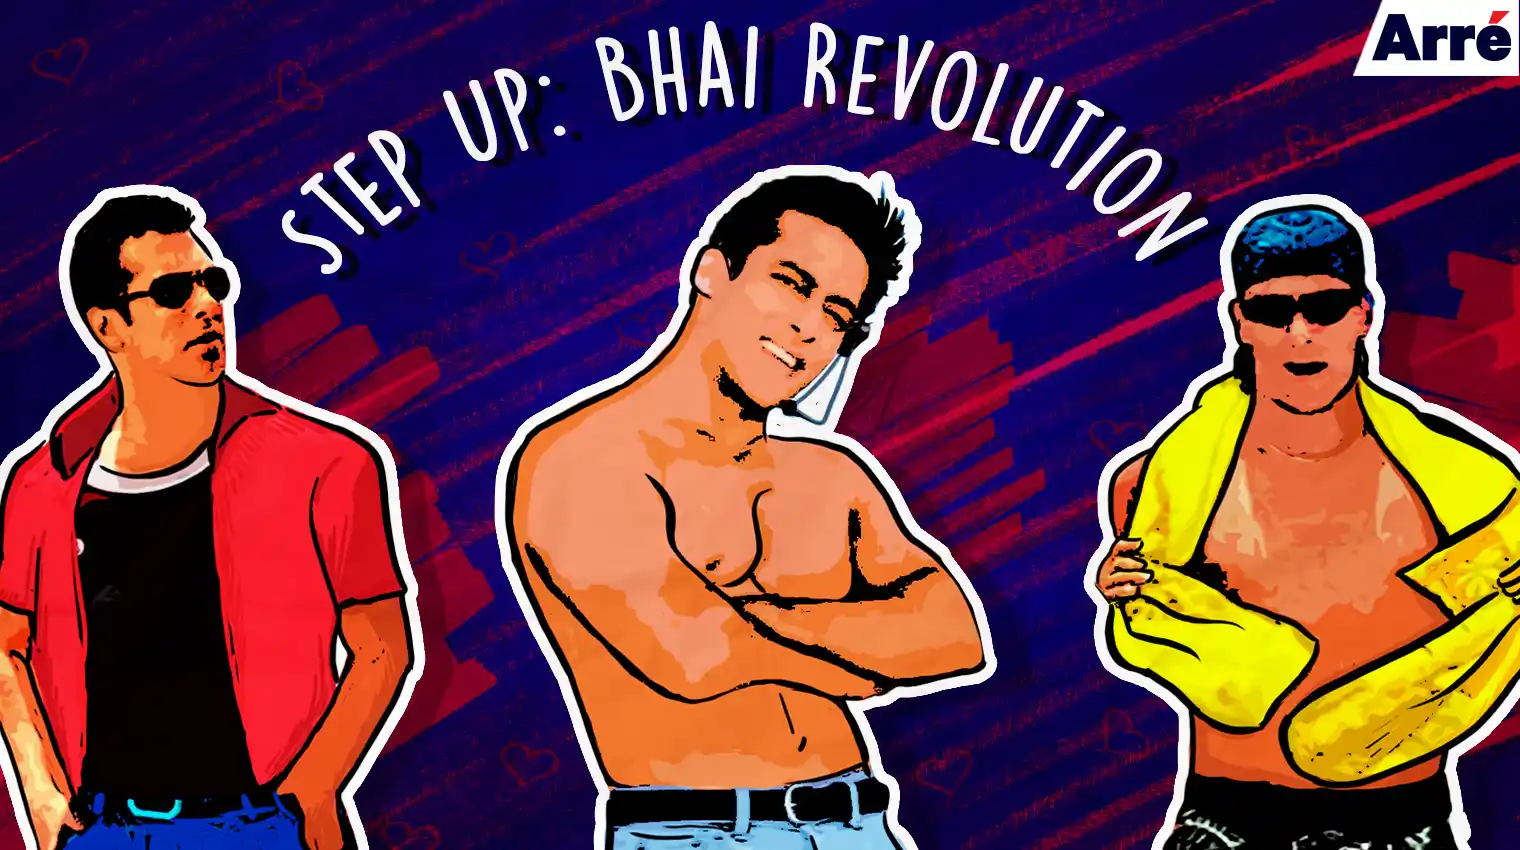 Salman Khan's Dance Evolution and the Art of Bhai-Boying